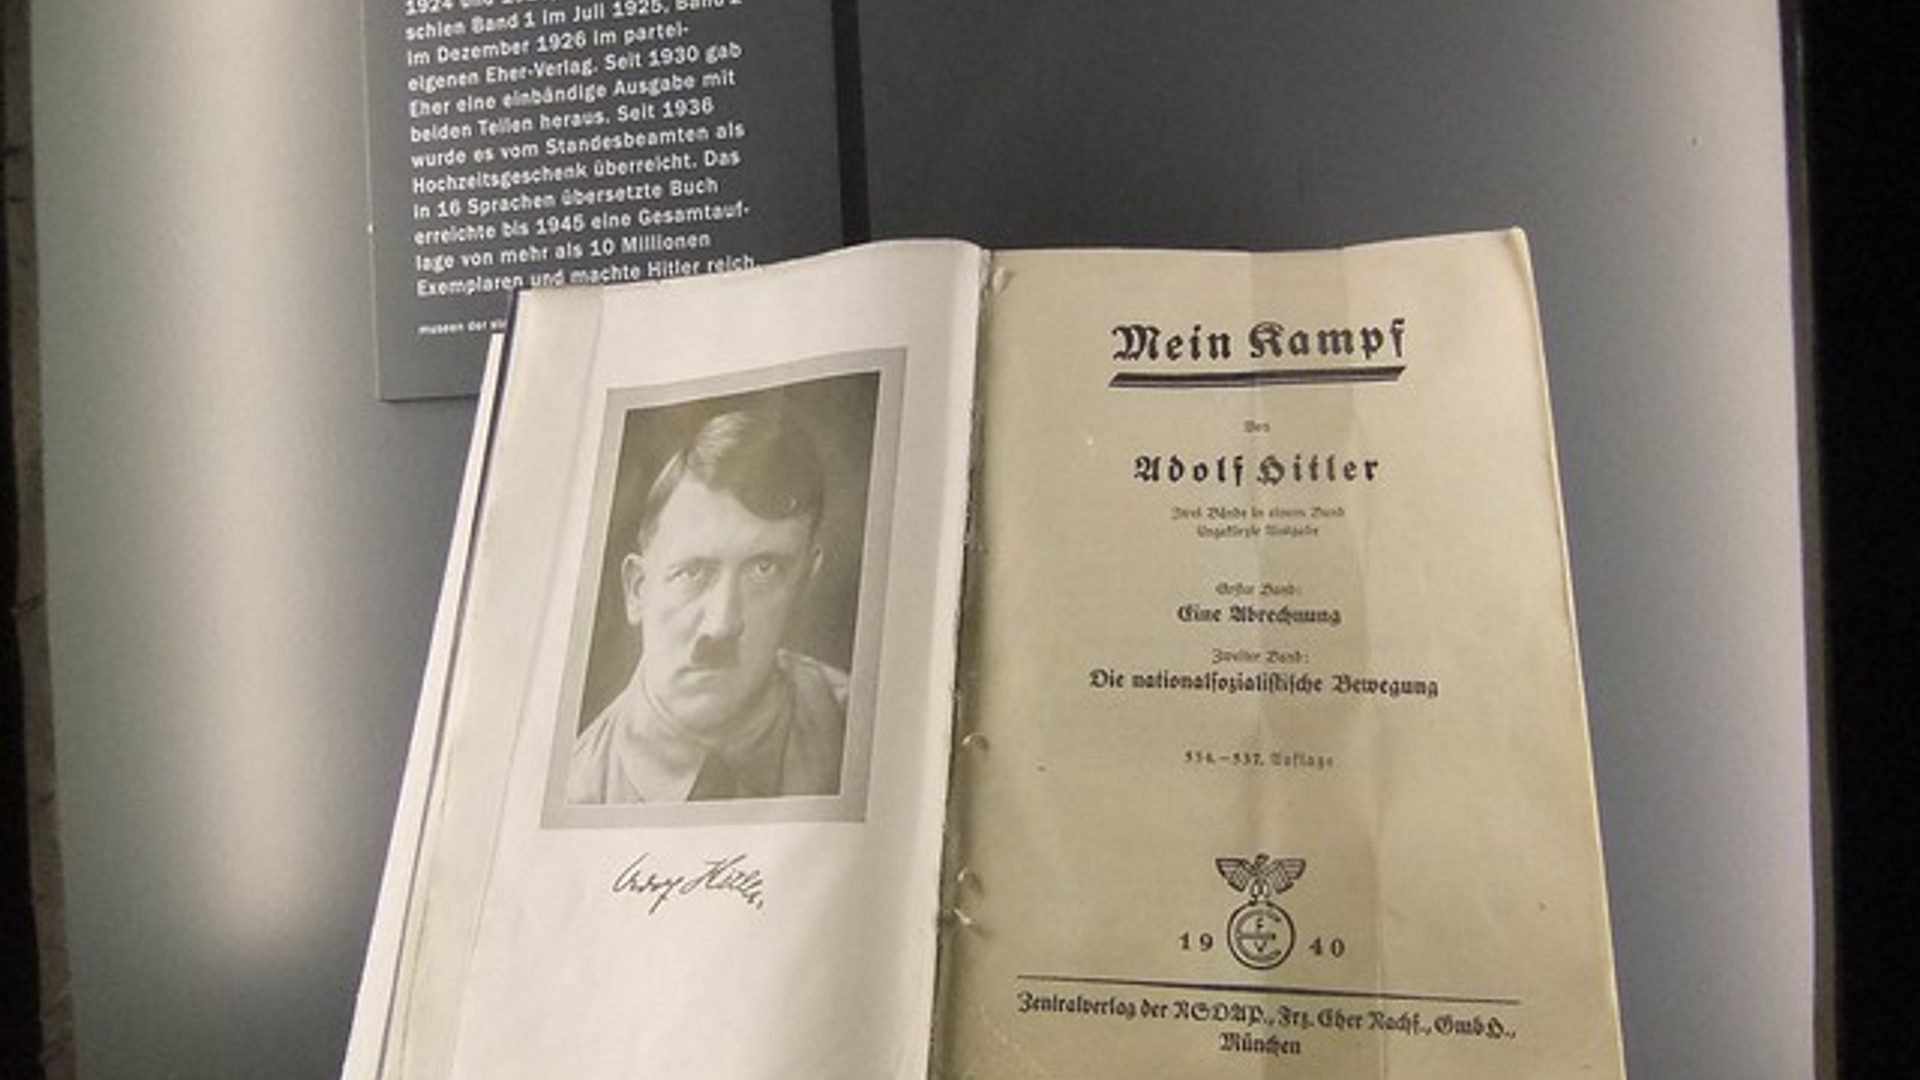 Hitler's Mein Kampf - The Documentation Centre (Dokumentationsze